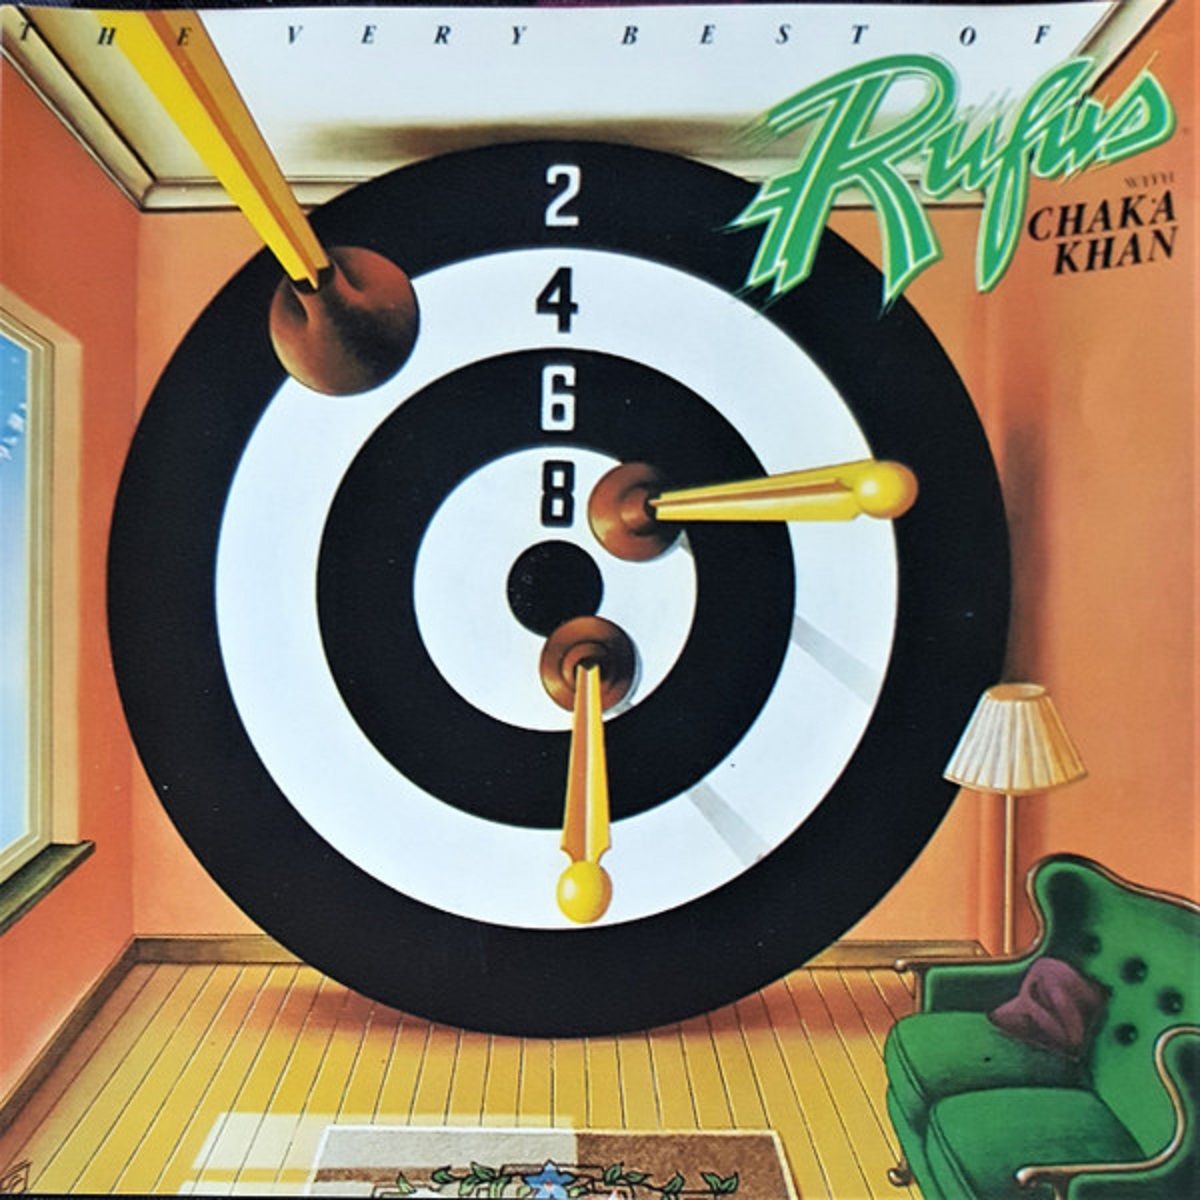 RUFUS WITH CHAKA KHAN - THE VERY BEST OF RUFUS WITH CHAKA KHAN (CD) (1982)